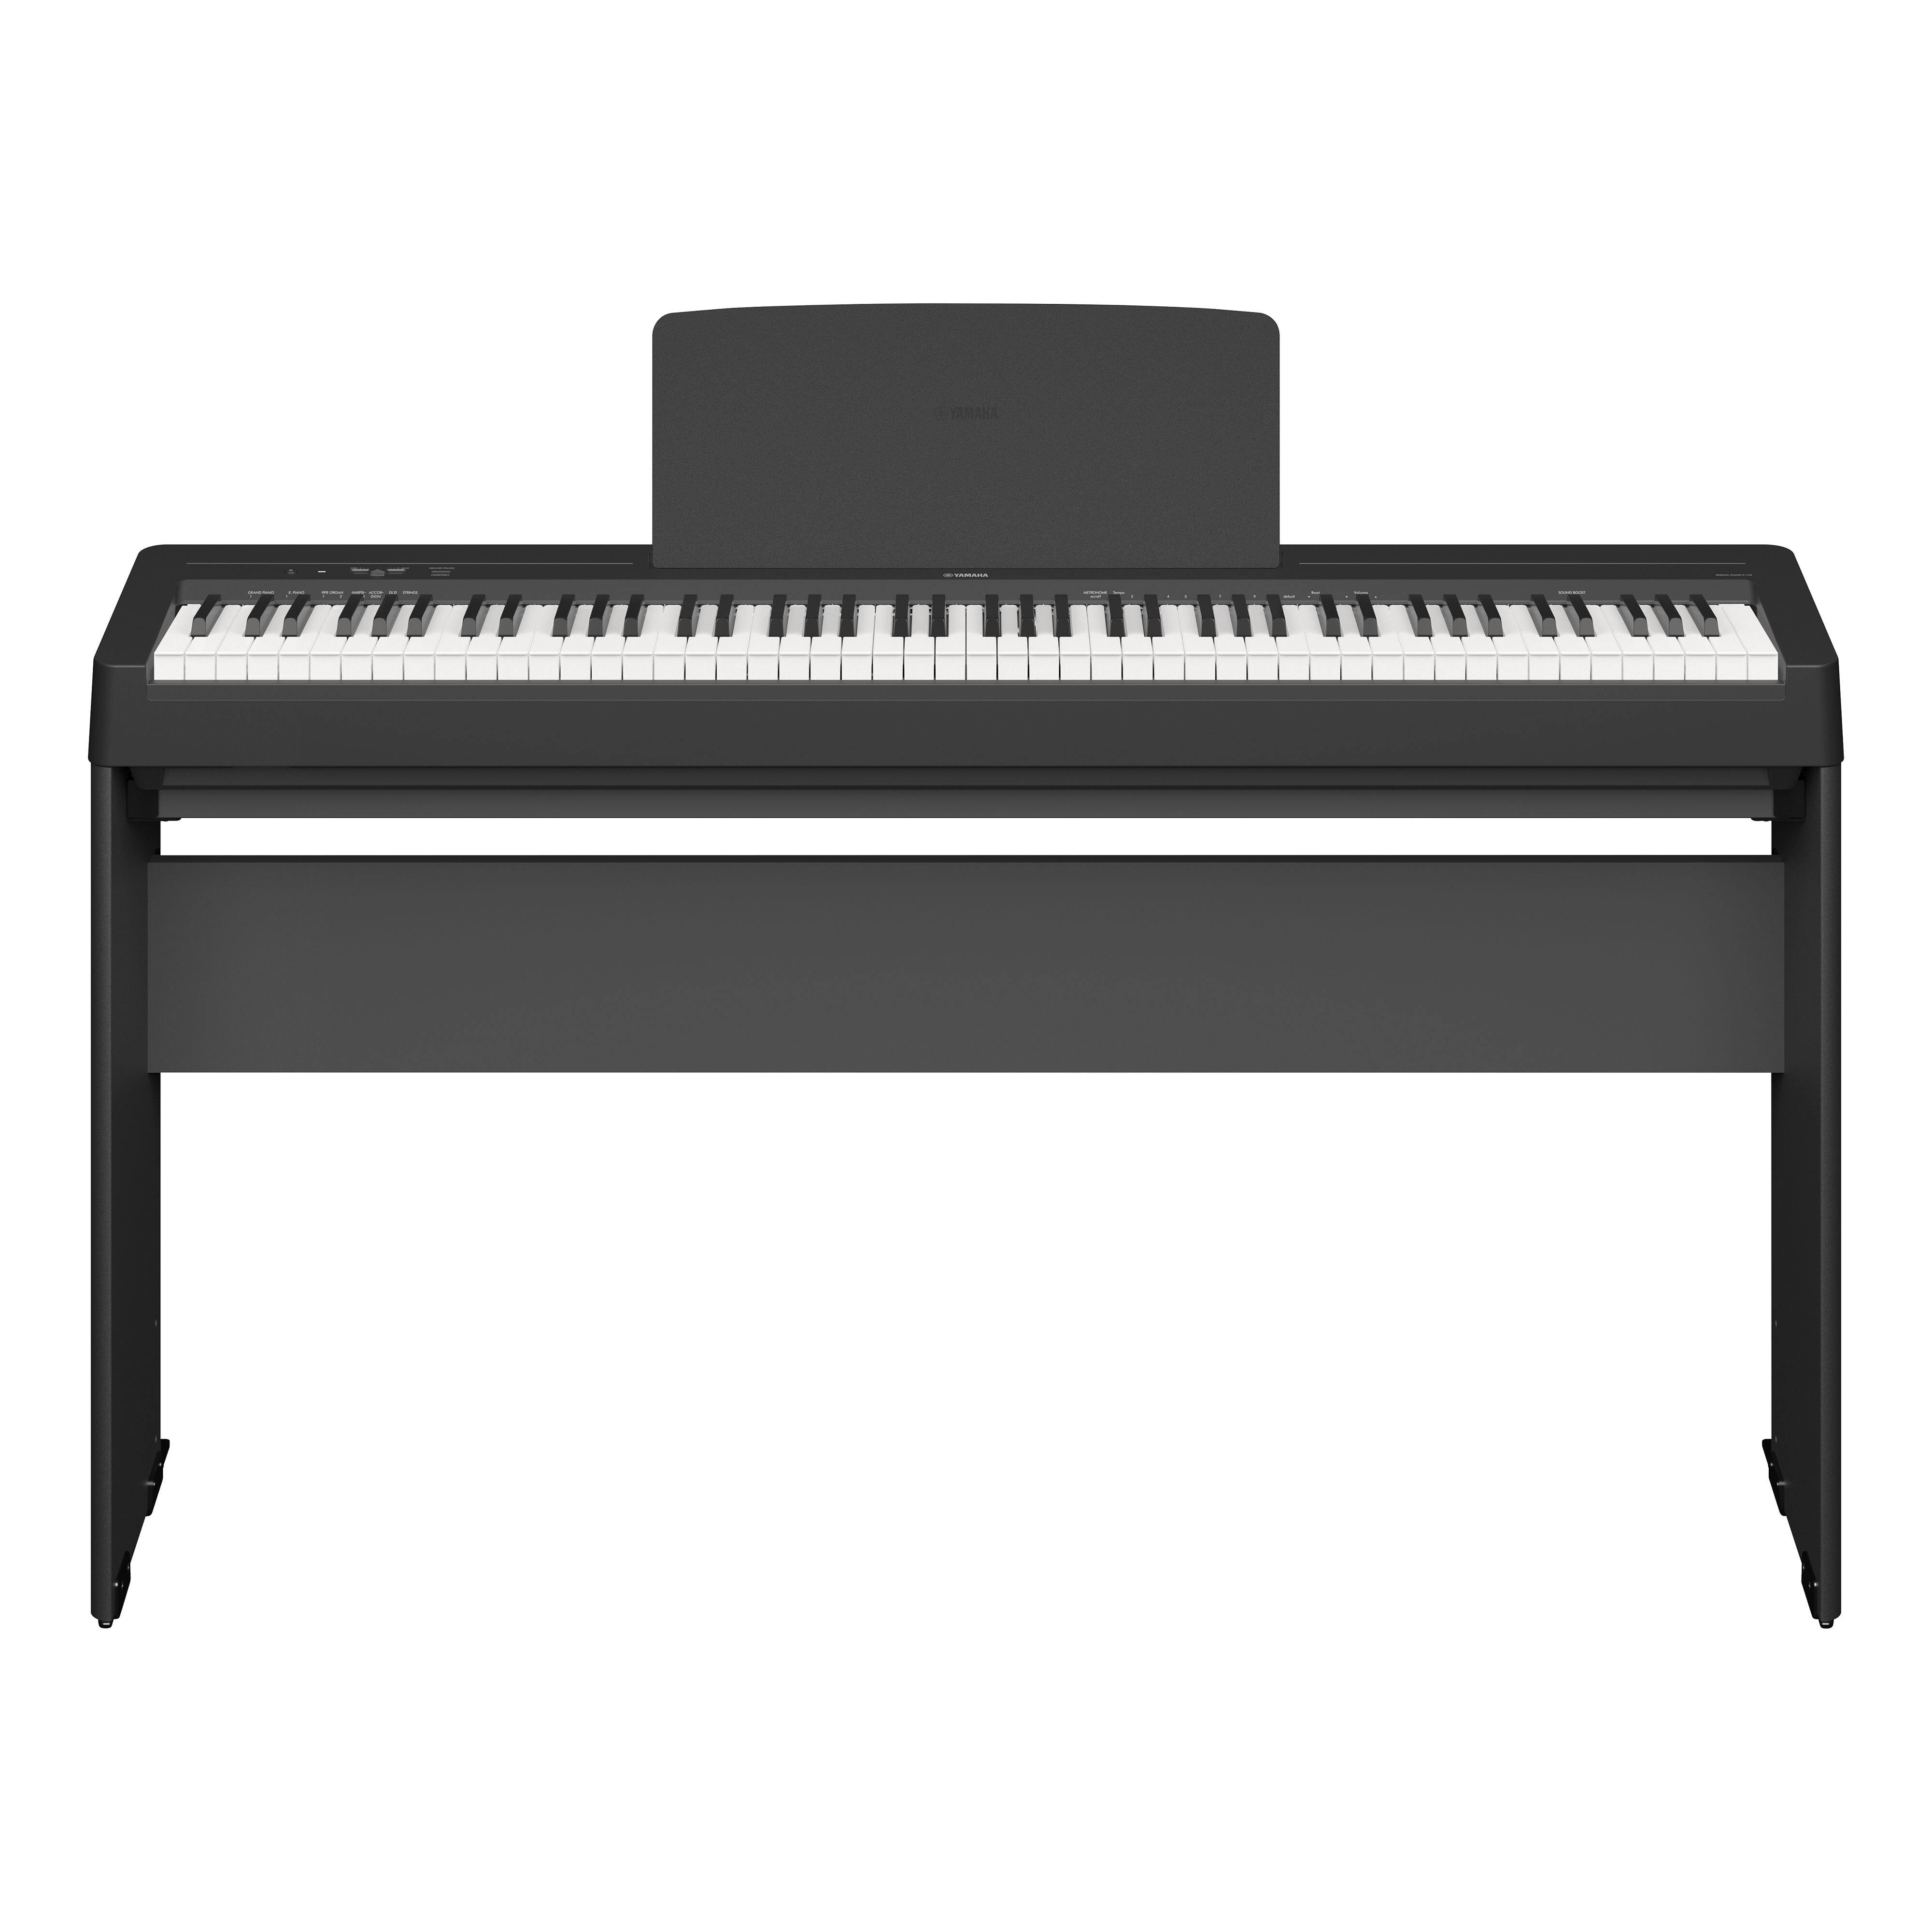 GHC (progressive hammer feel compact) keyboard (88 keys)